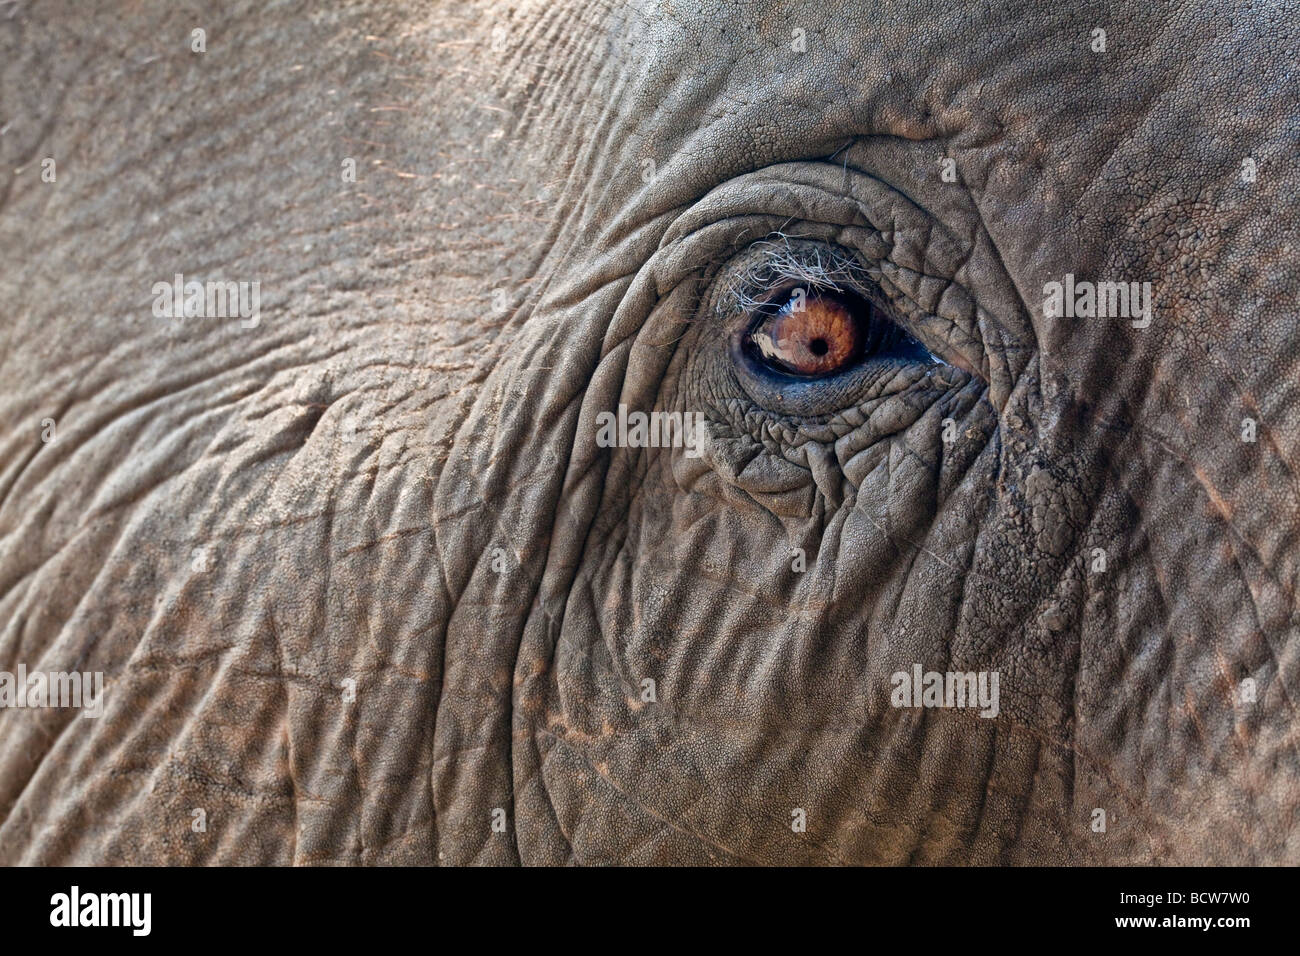 Aufnahme von erwachsenen Elefanten Auge Horizontal hautnah Stockfoto